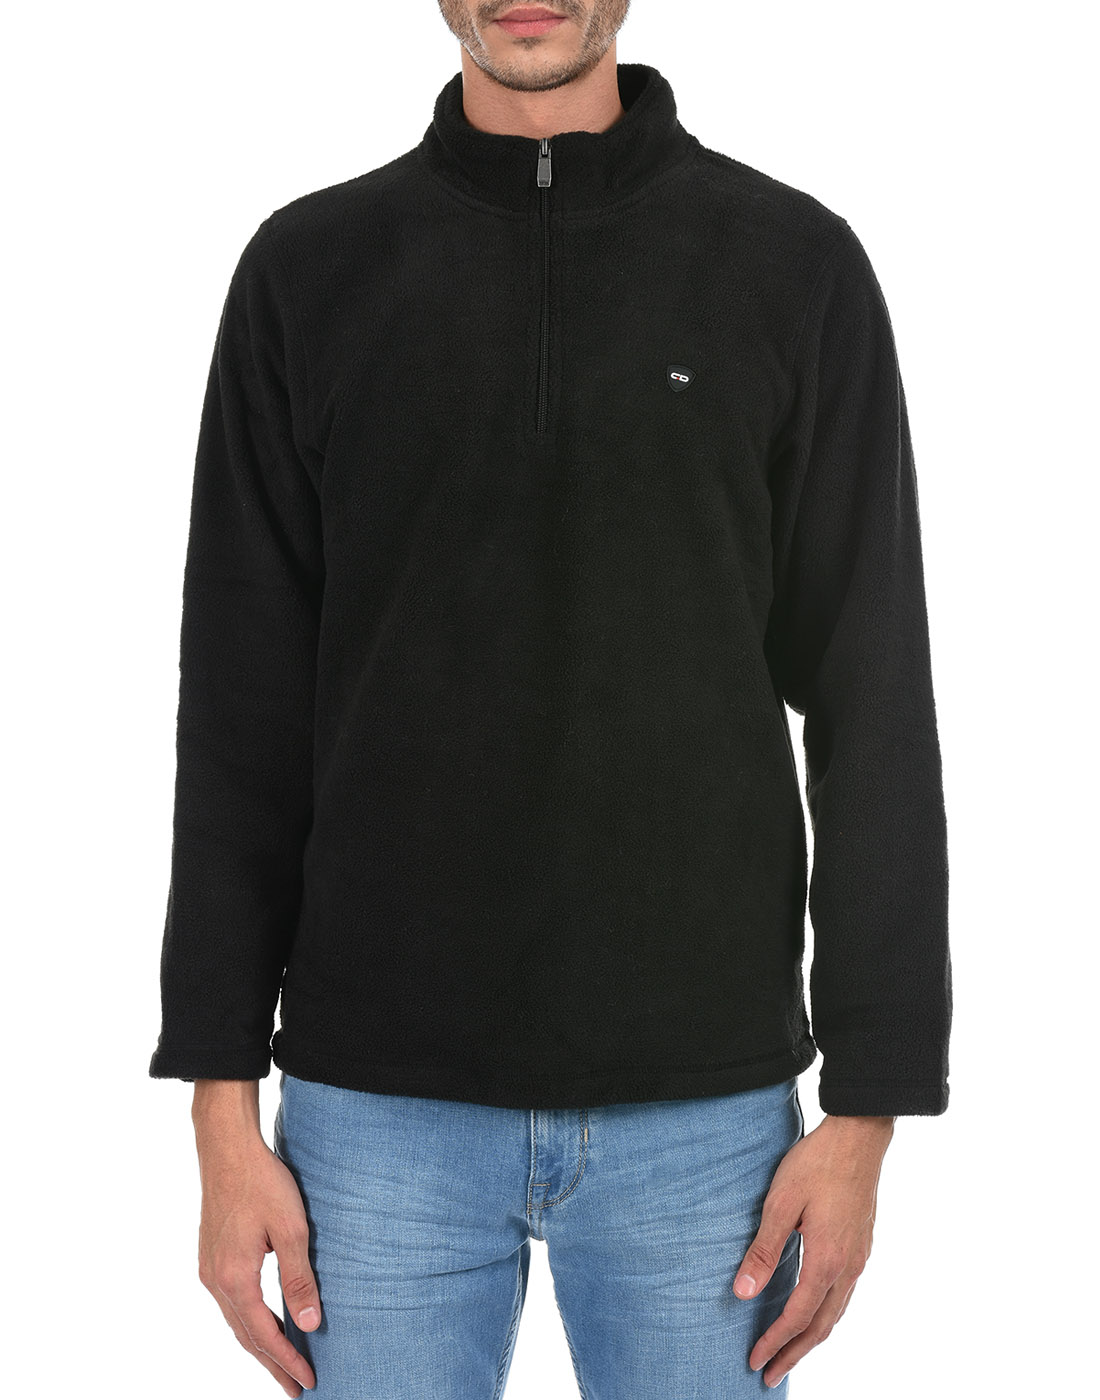 Cloak & Decker by Monte Carlo Men Solid Black Sweatshirt